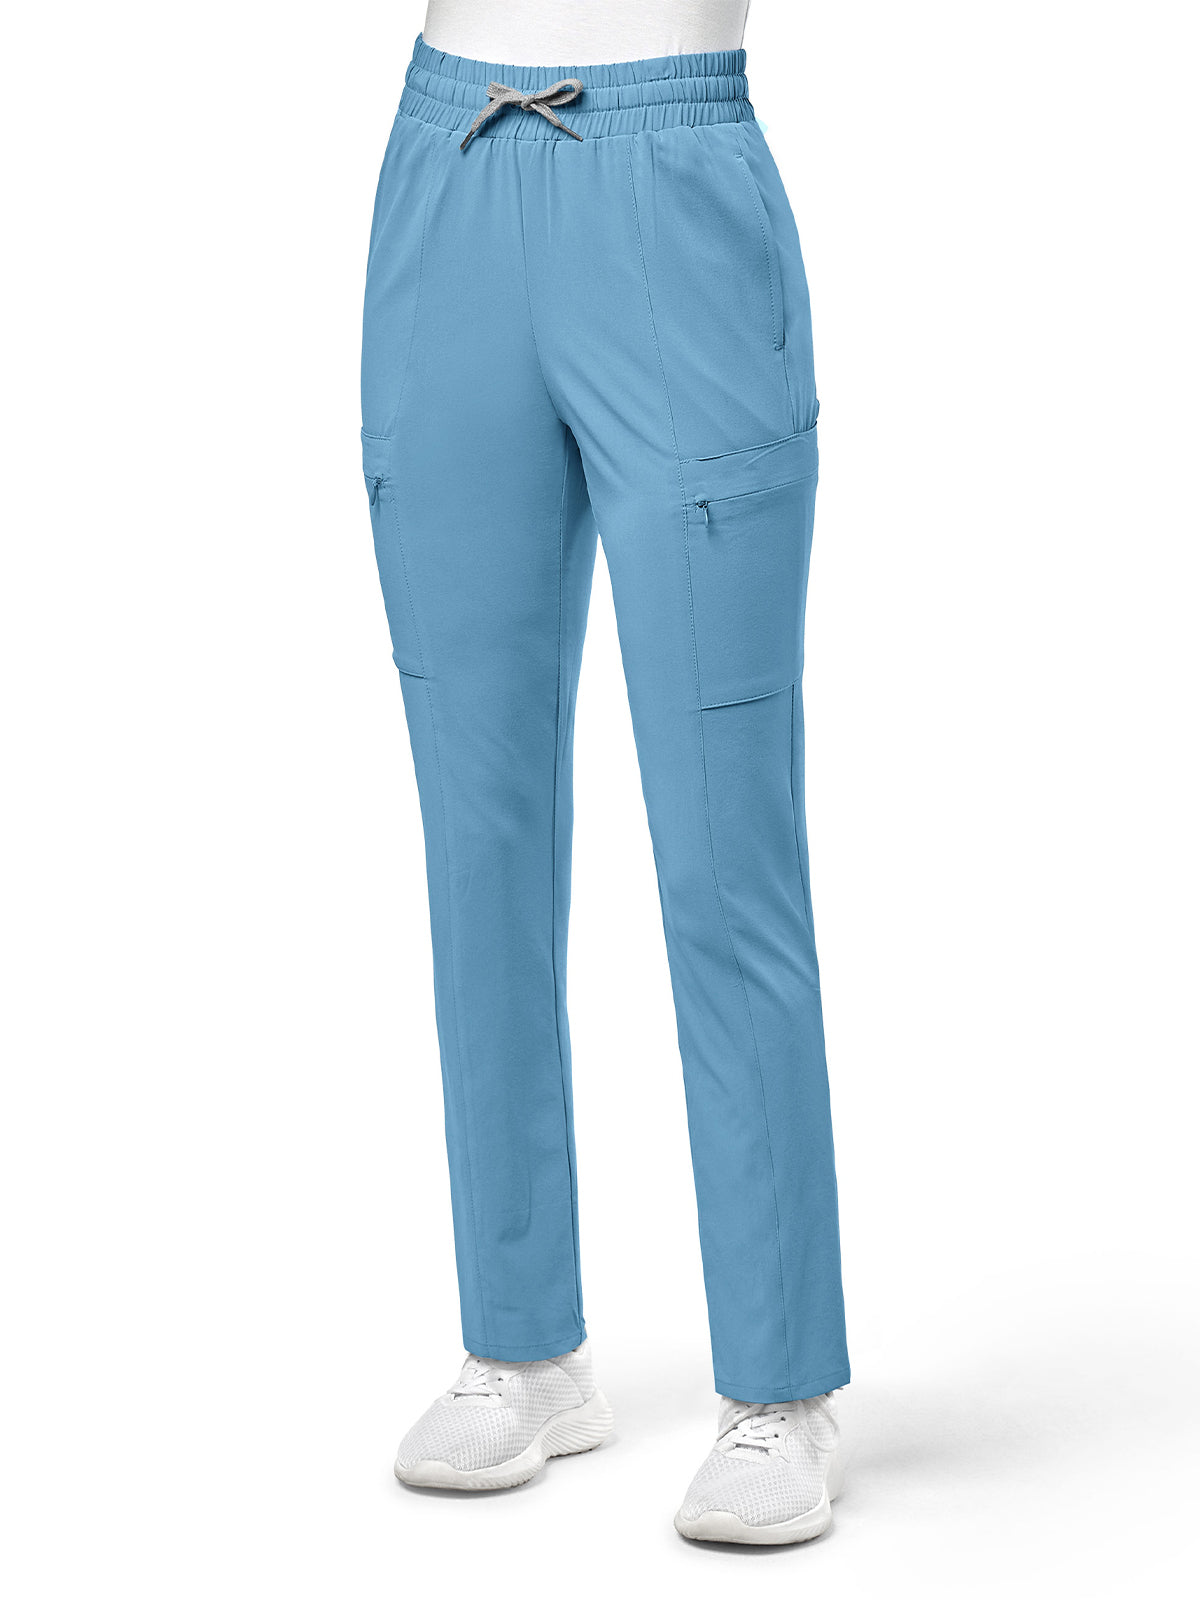 Women's High Waist Slim Cargo Pant - 5334 - Bay Blue